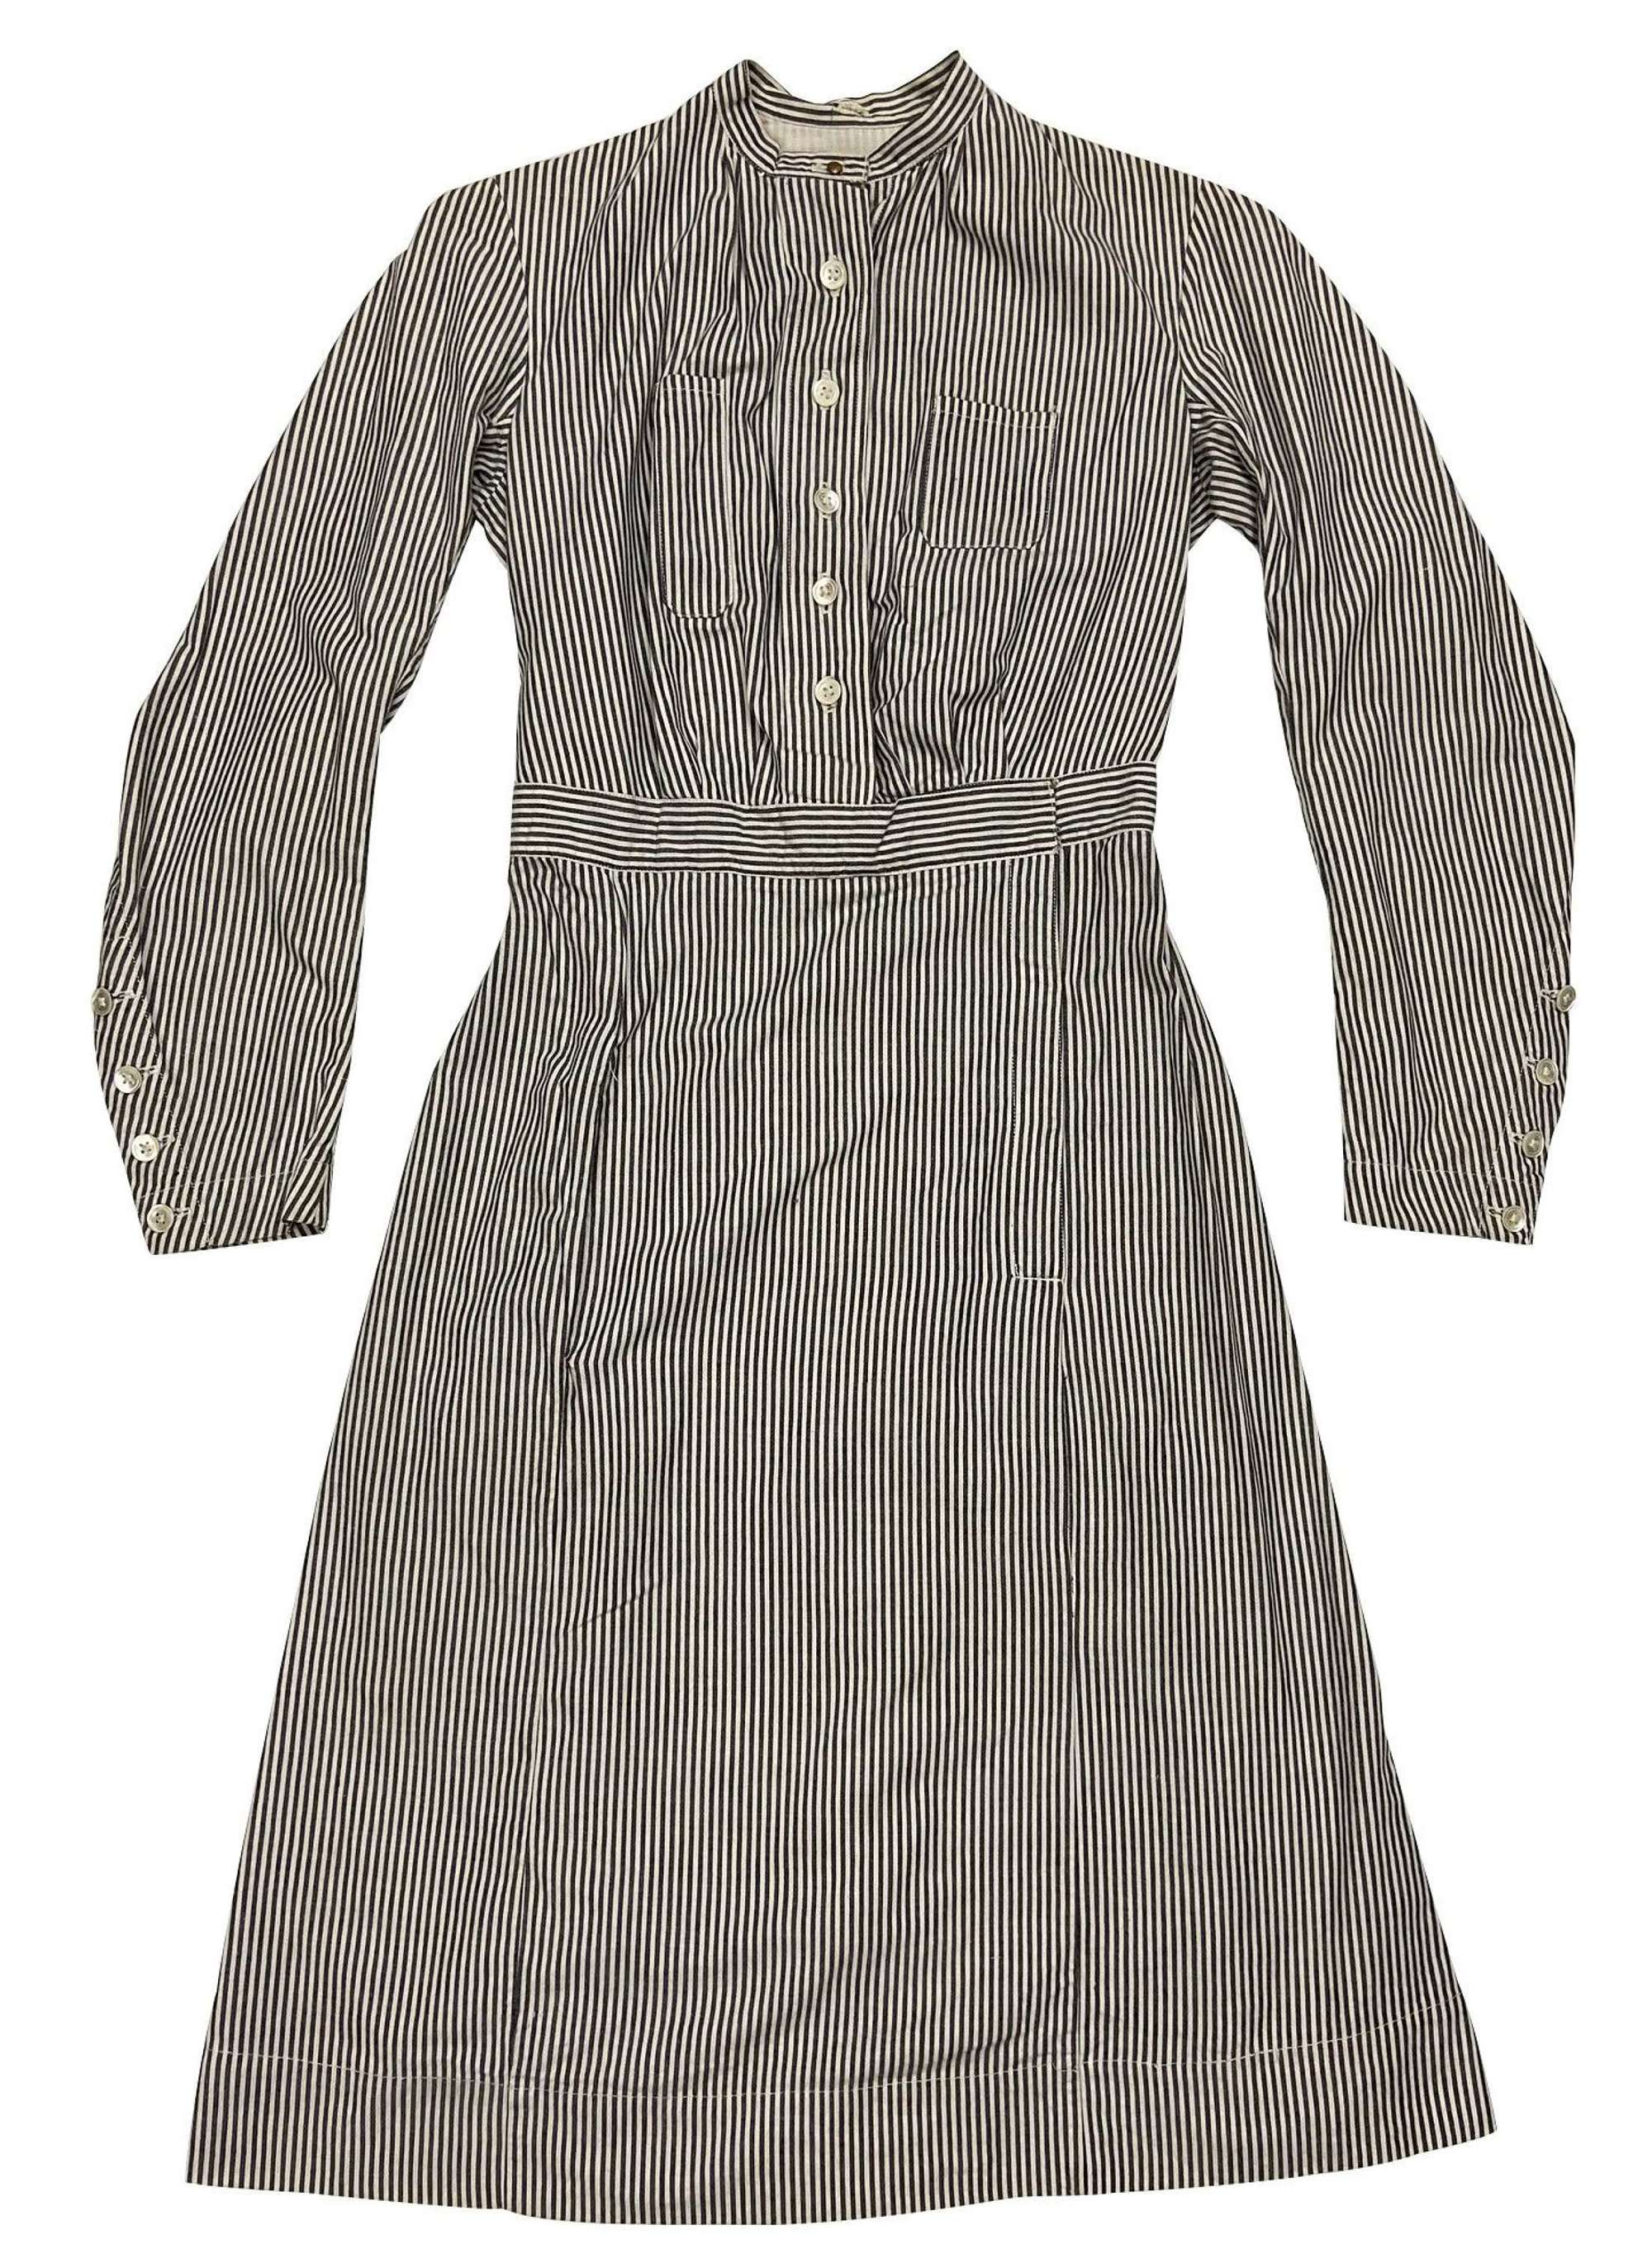 Vintage 1940s Ticking Cotton Nurses Dress